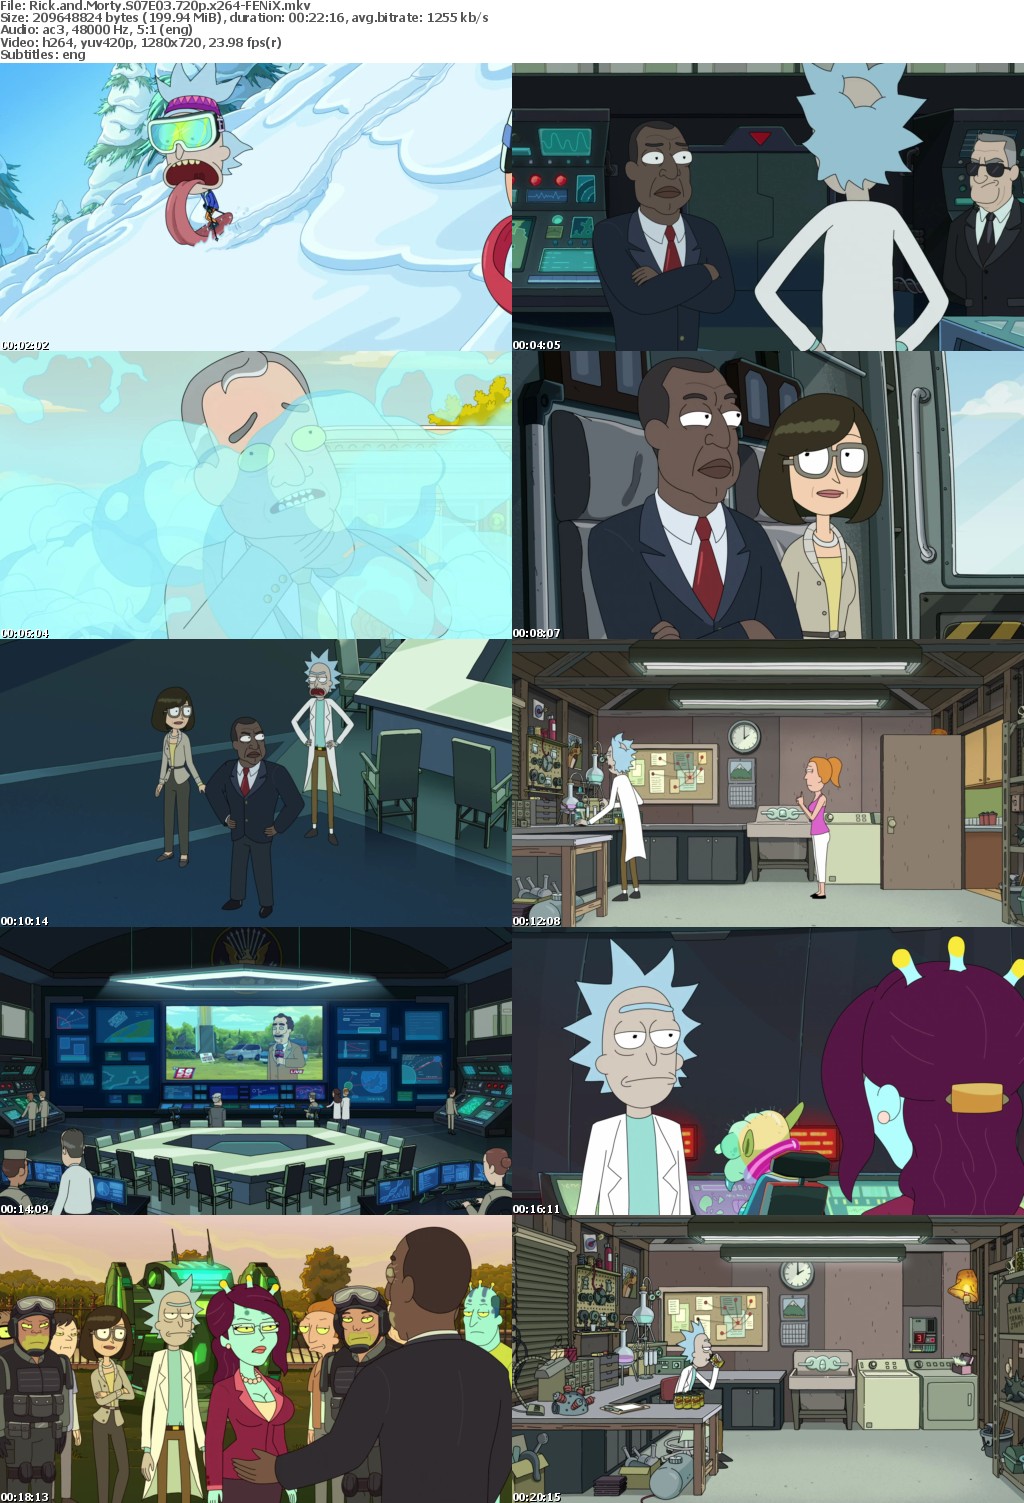 Rick and Morty S07E03 720p x264-FENiX Saturn5